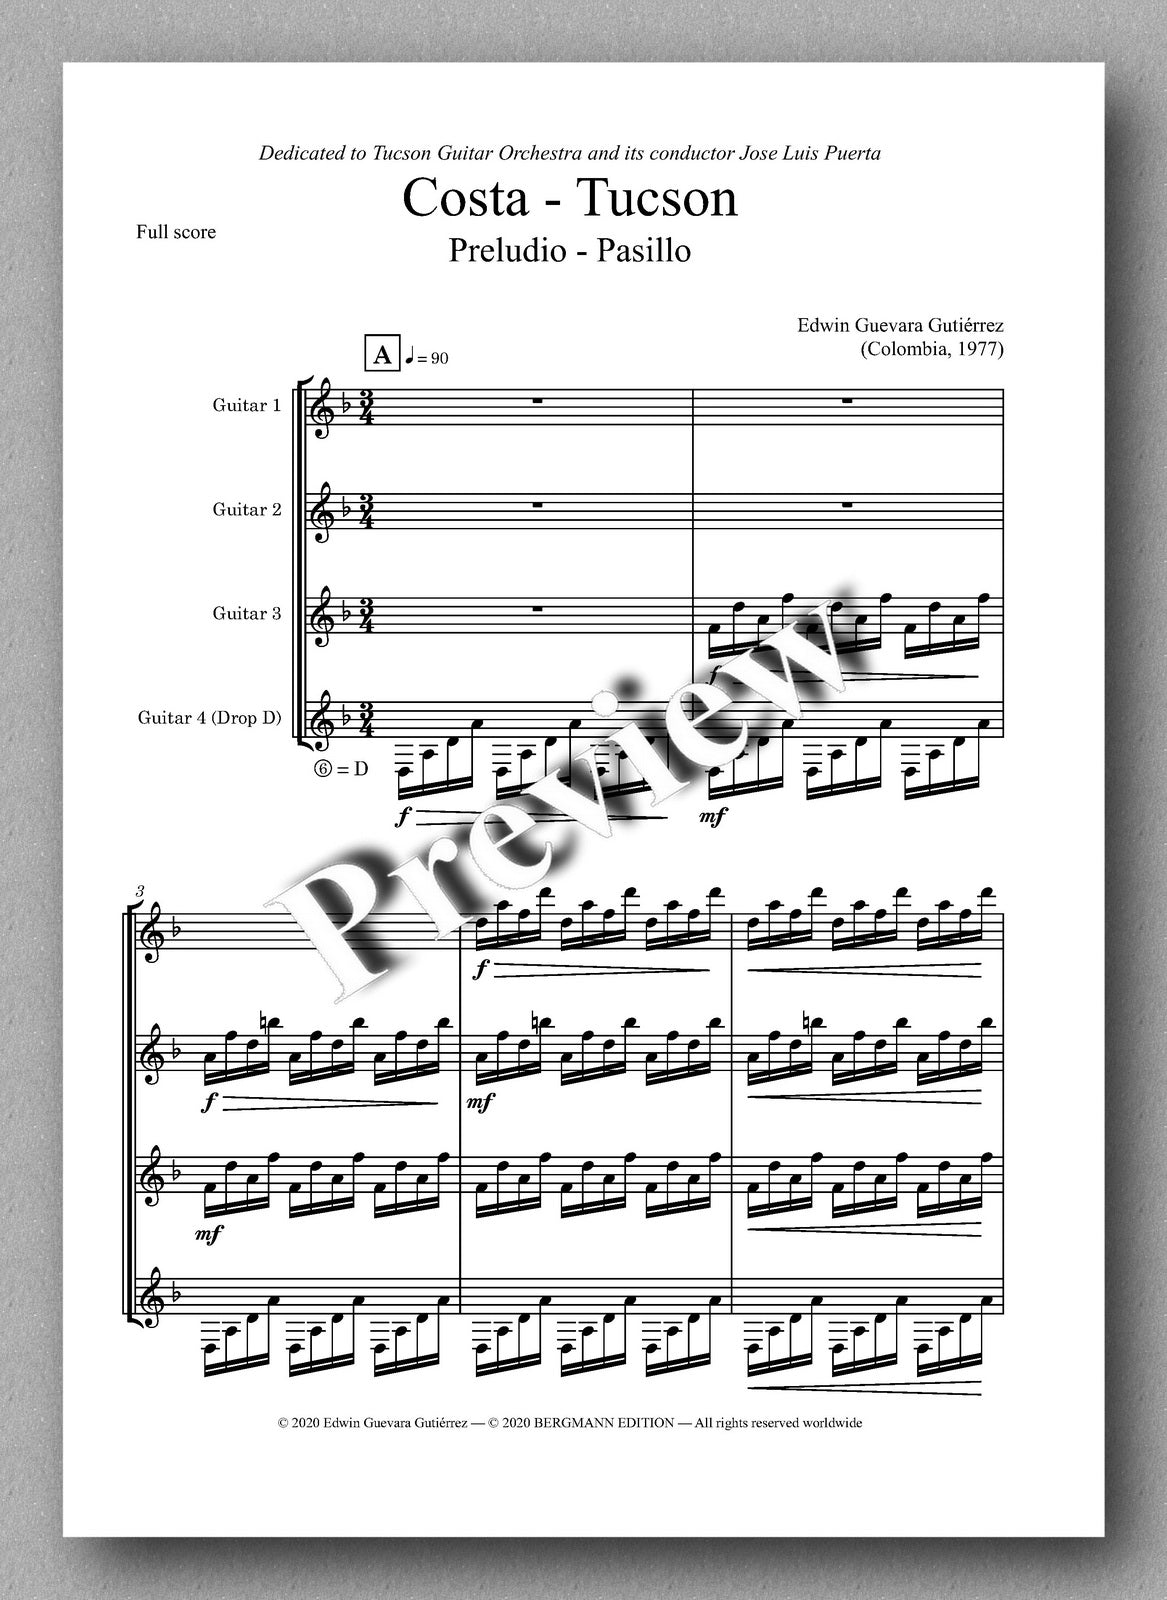 COSTA - TUCSON by Edwin Guevara Gutiérrez  - preview of the music score 1